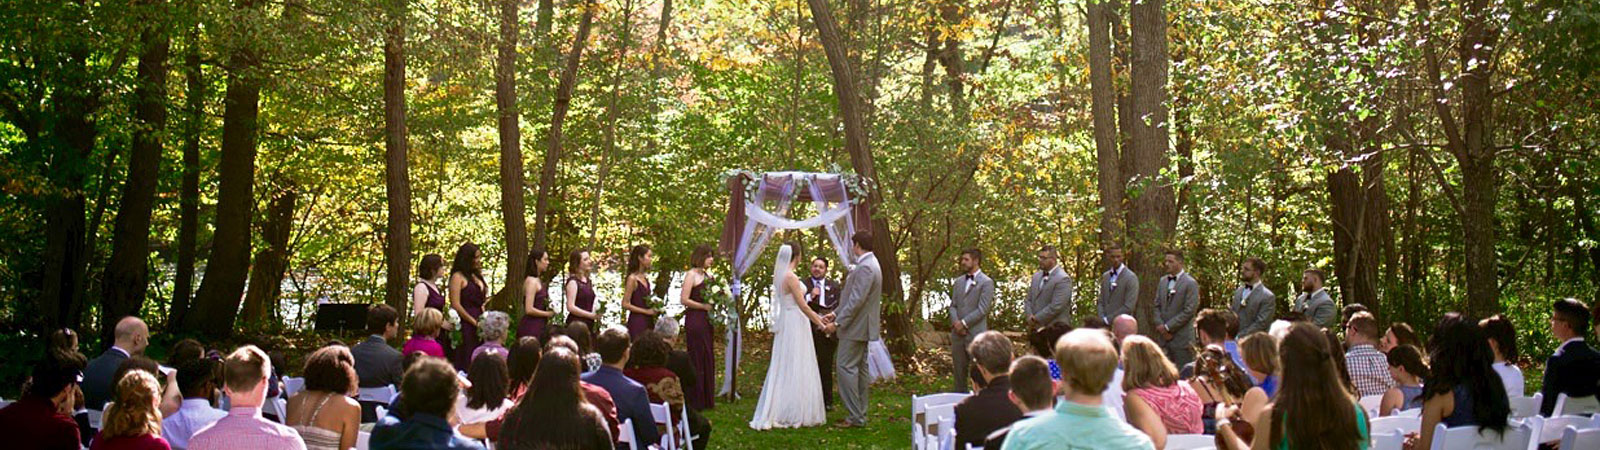 large outdoor wedding